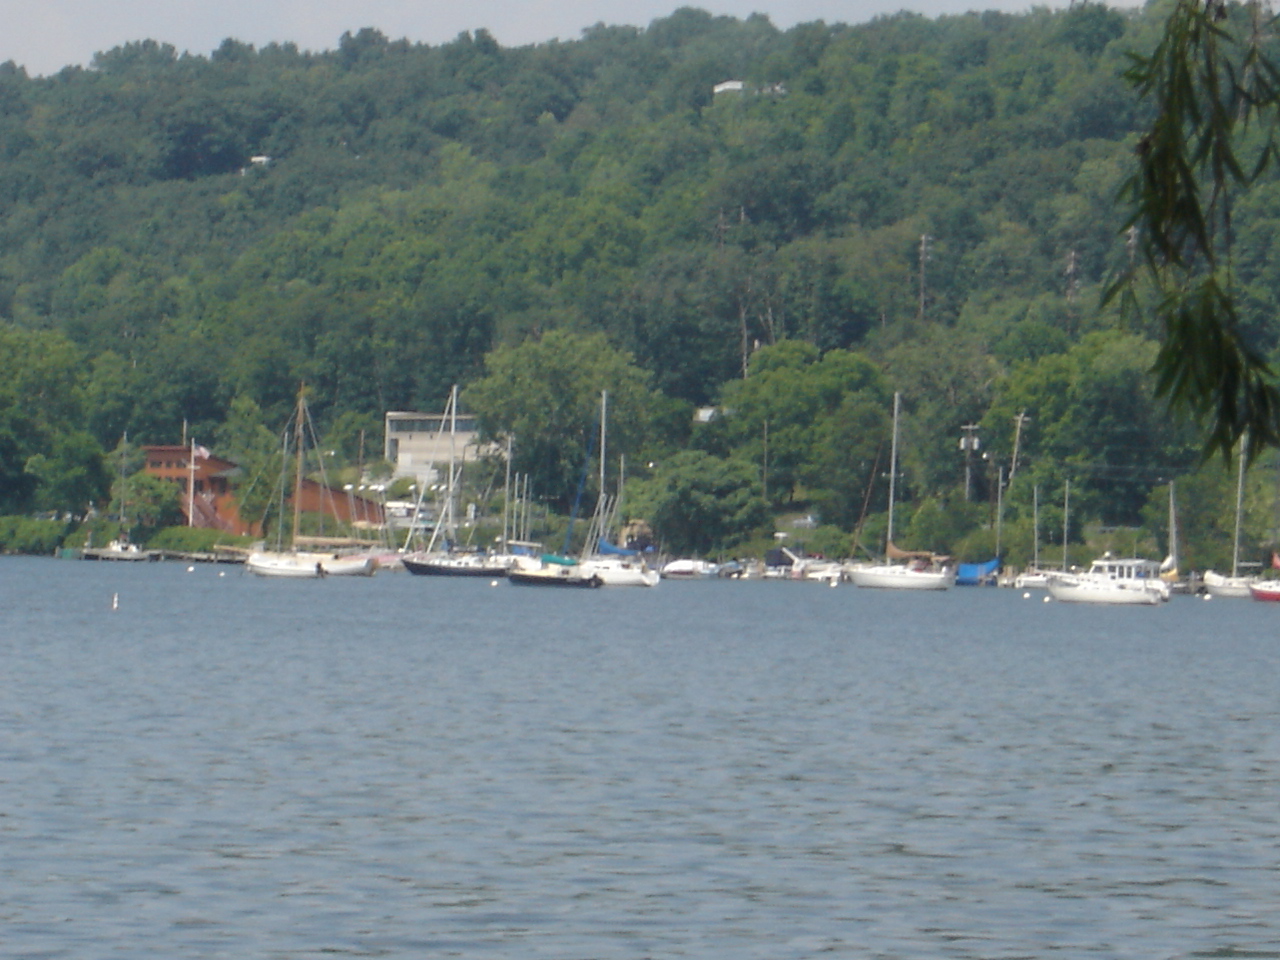 Boats on Cayuga Lake